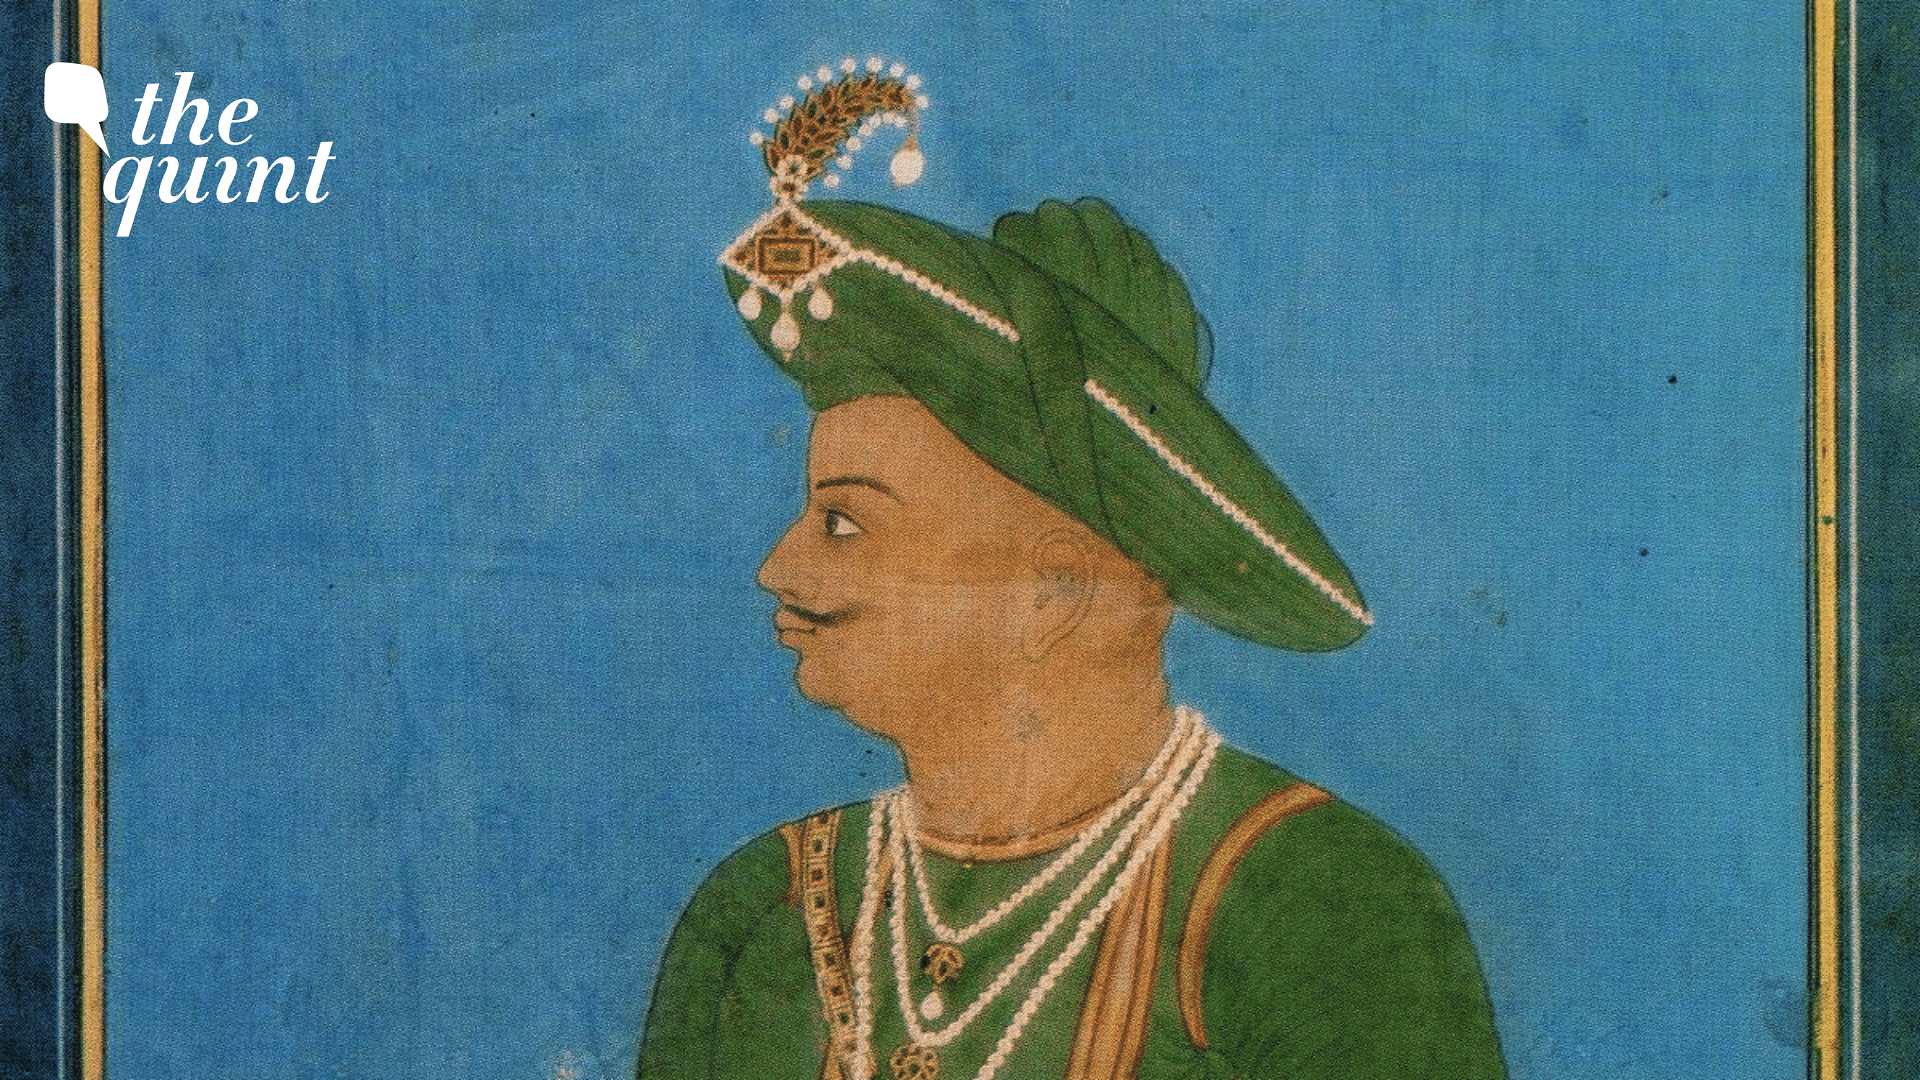 <div class="paragraphs"><p>Tipu Sultan, 18th century ruler of the Mysuru Kingdom.</p></div>